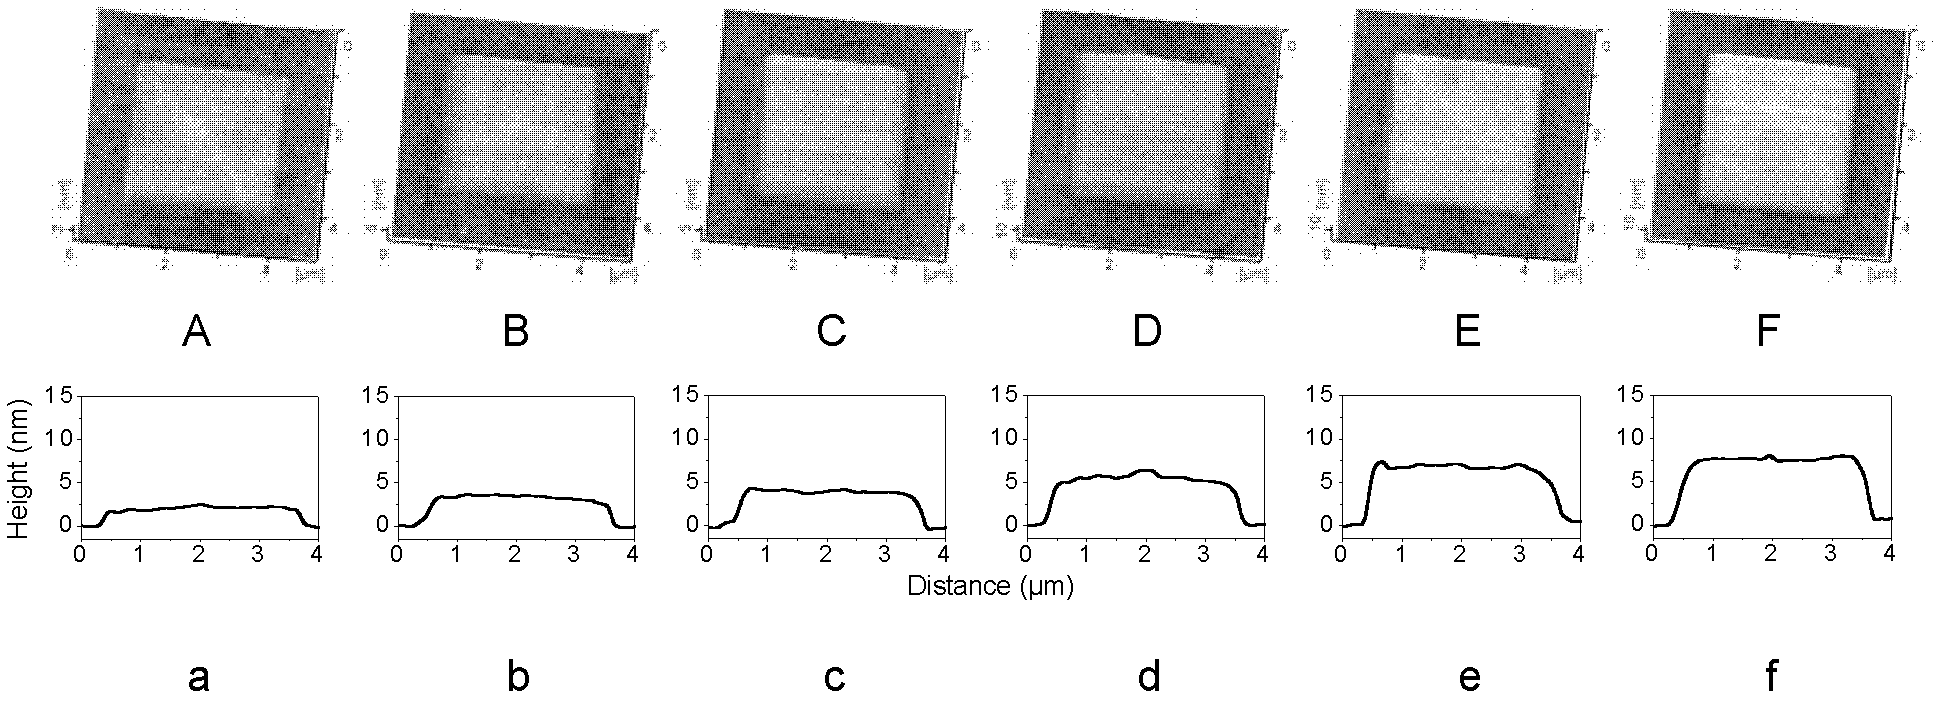 Glass surface nanofabrication method based on friction-induced selective etching